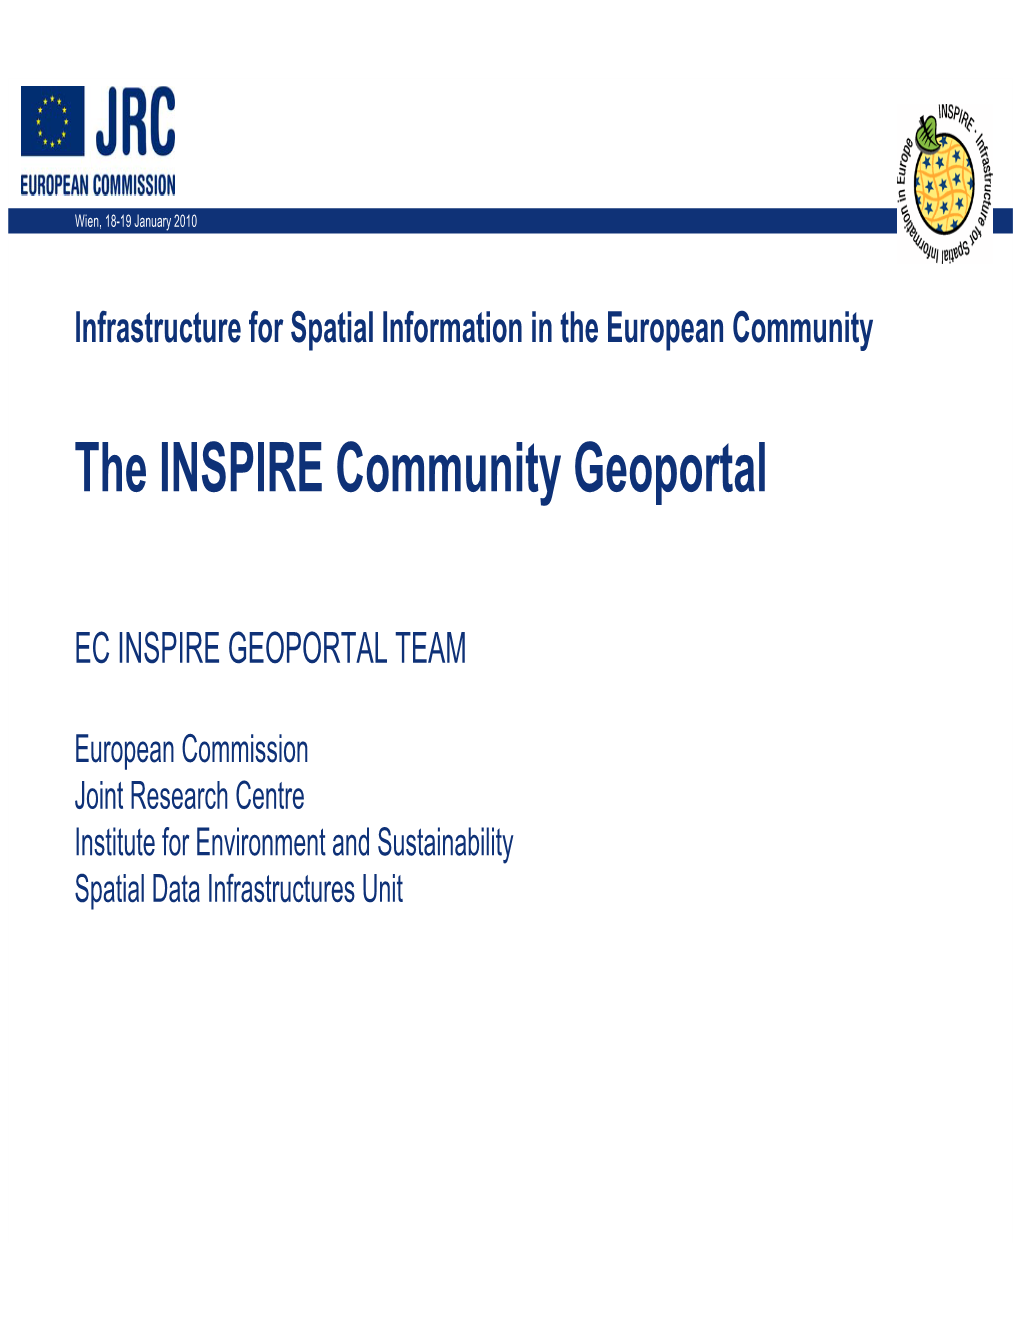 The INSPIRE Community Geoportal